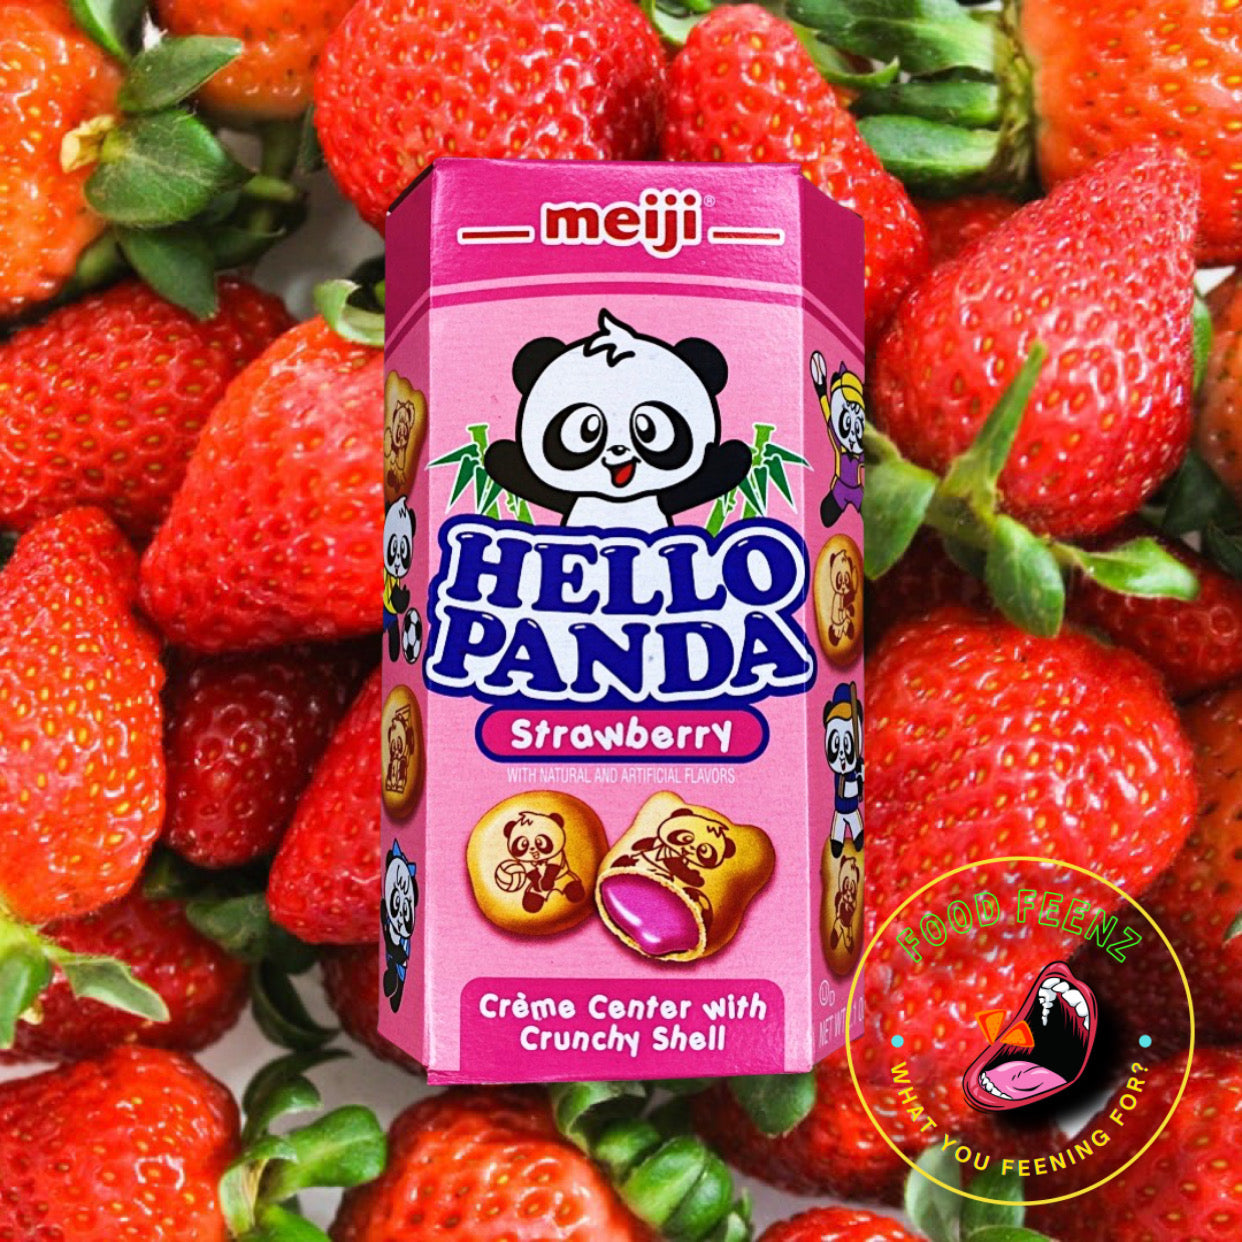 Hello Panda Strawberry Flavor